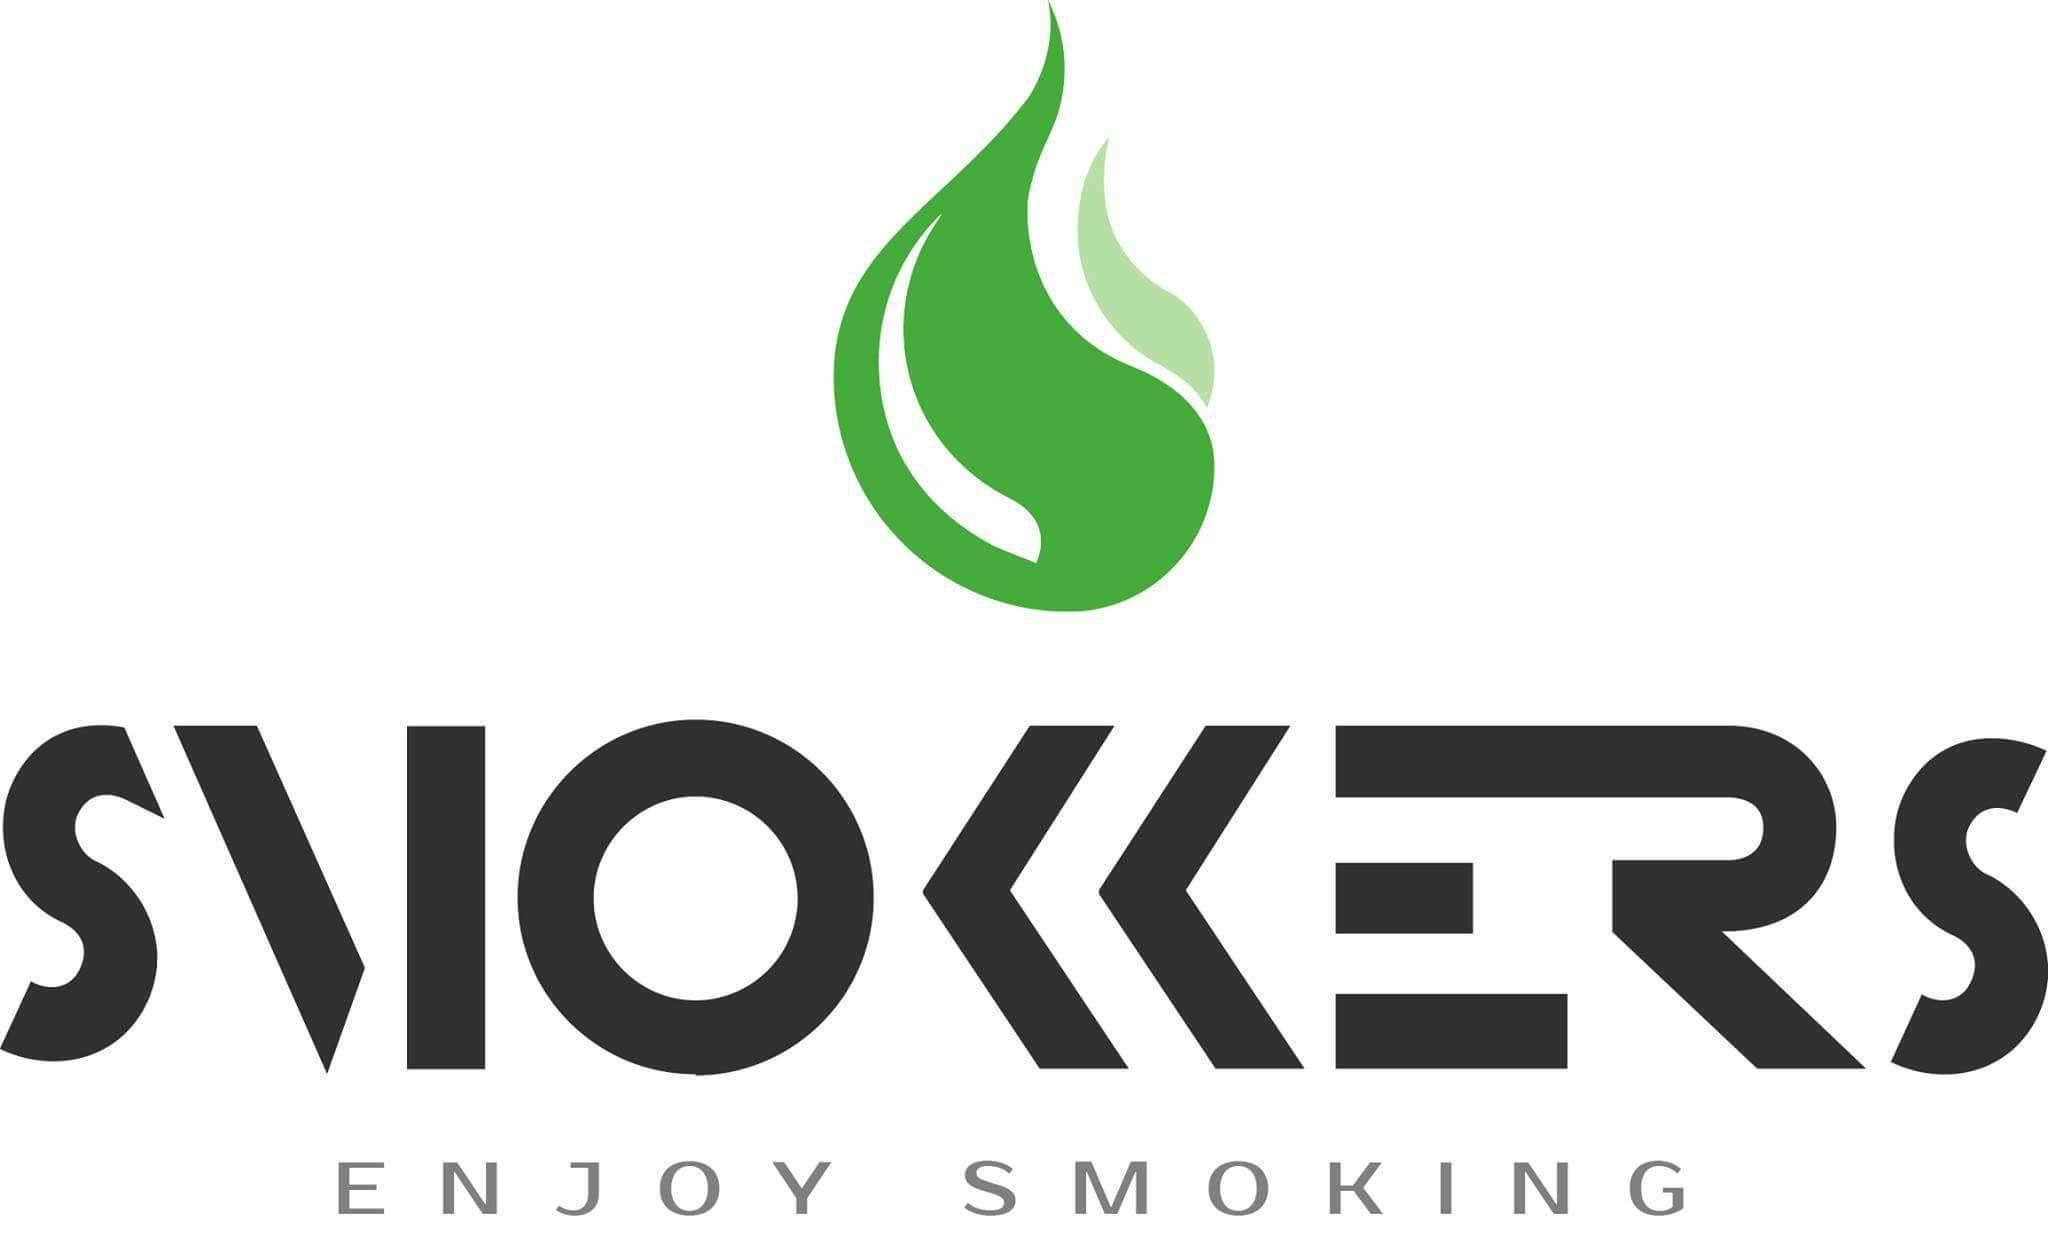 Unser Smokkers Logo!